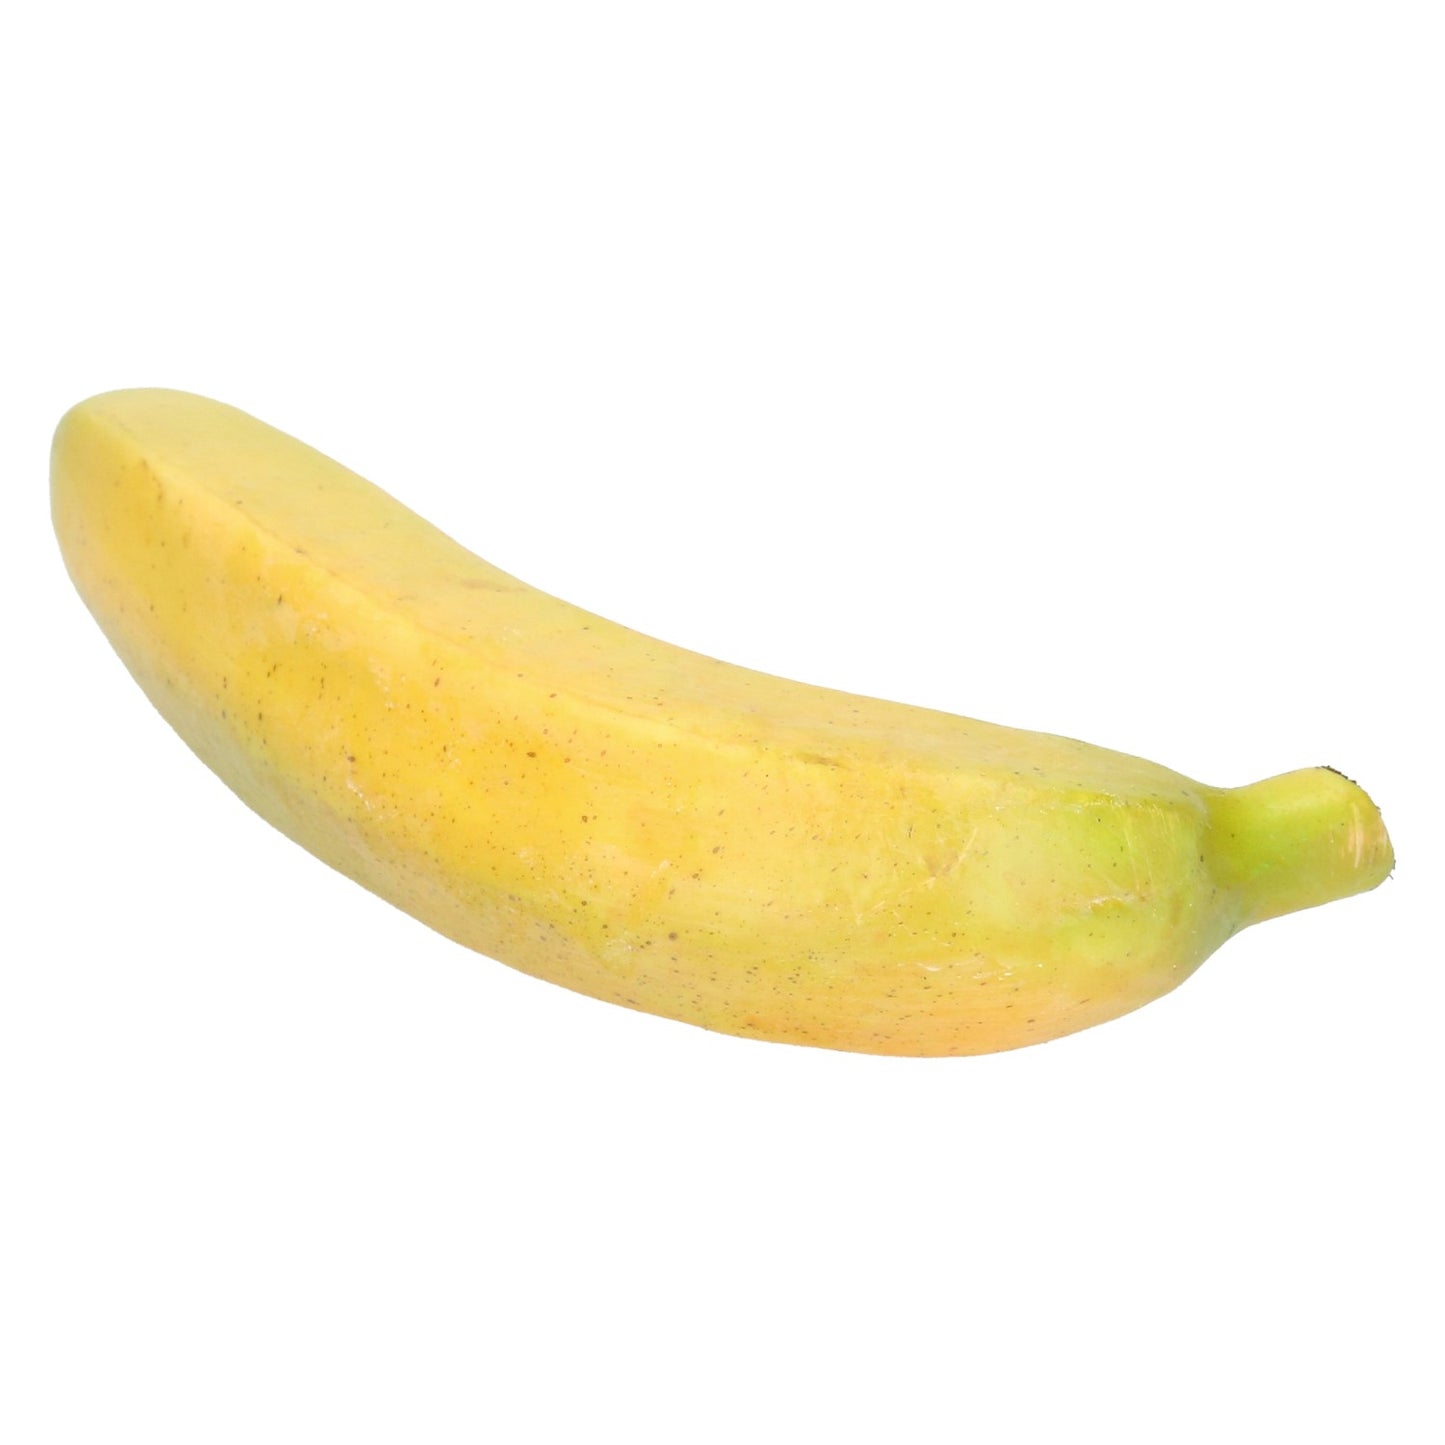 Früchte: Pflaumen, Bananen, Zitronen